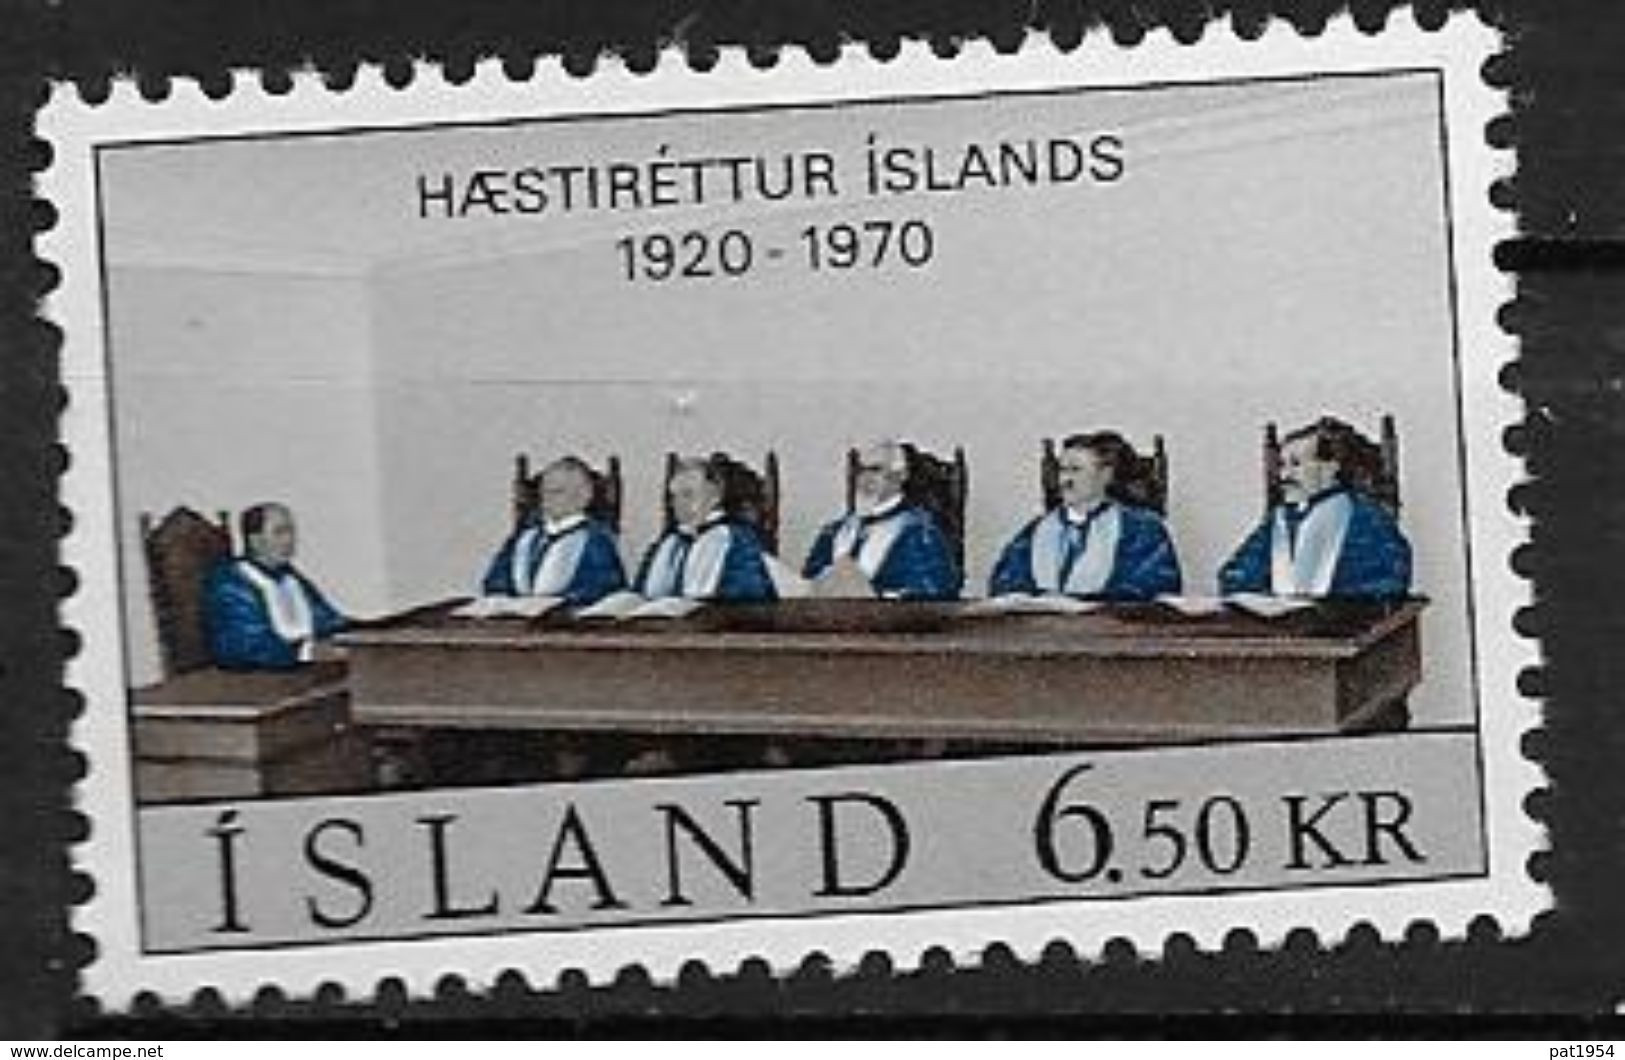 Islande 1970 N° 391  Neuf ** MNH Cour Suprême - Nuevos